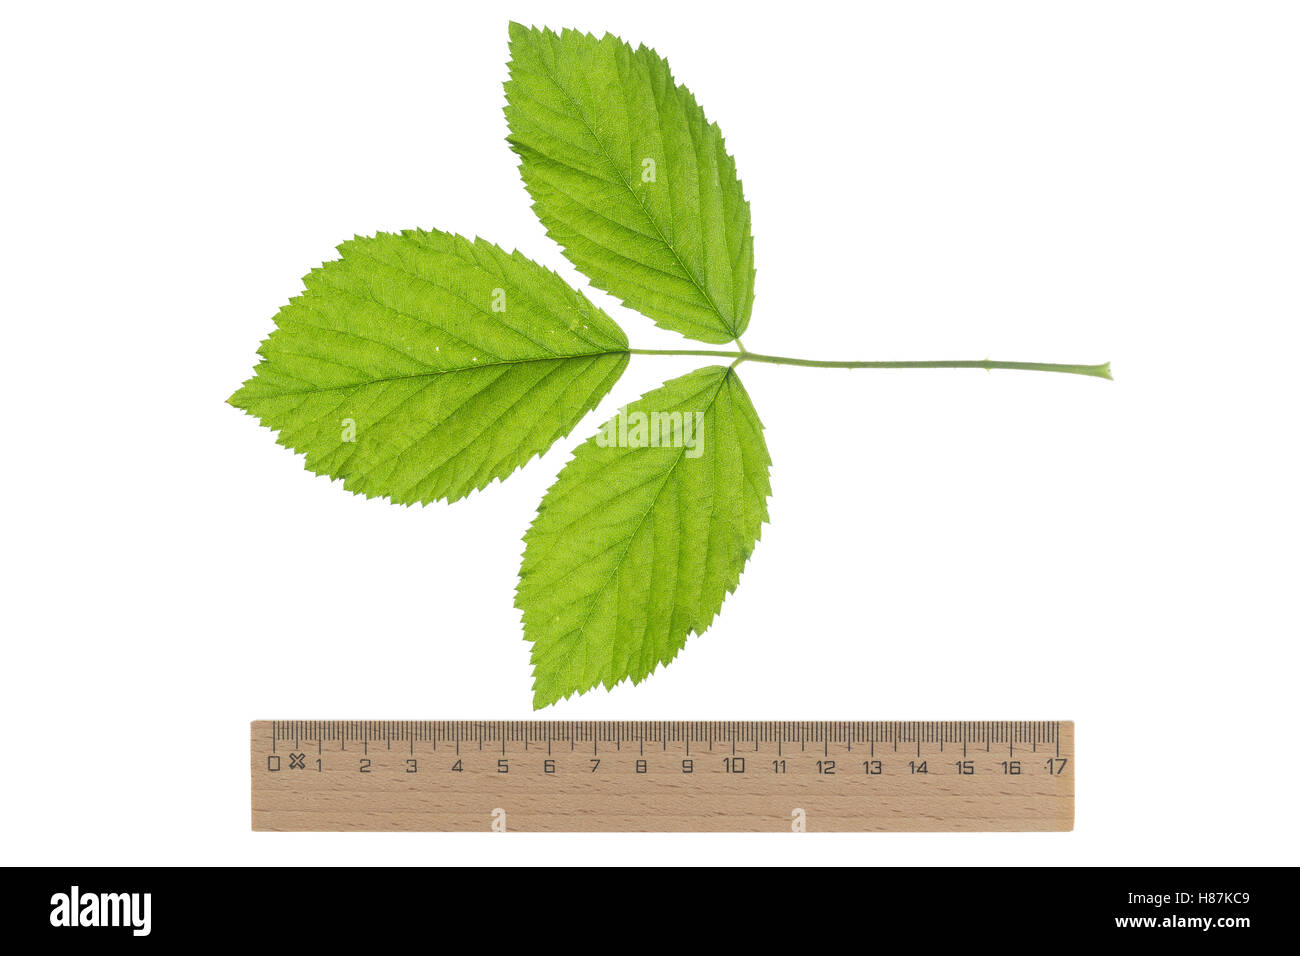 Brombeere, Echte Brombeere, Rubus fruticosus agg., Rubus sectio Rubus, blackberry, bramble, ronce. Blatt, Blätter, leaf, leaves Stock Photo